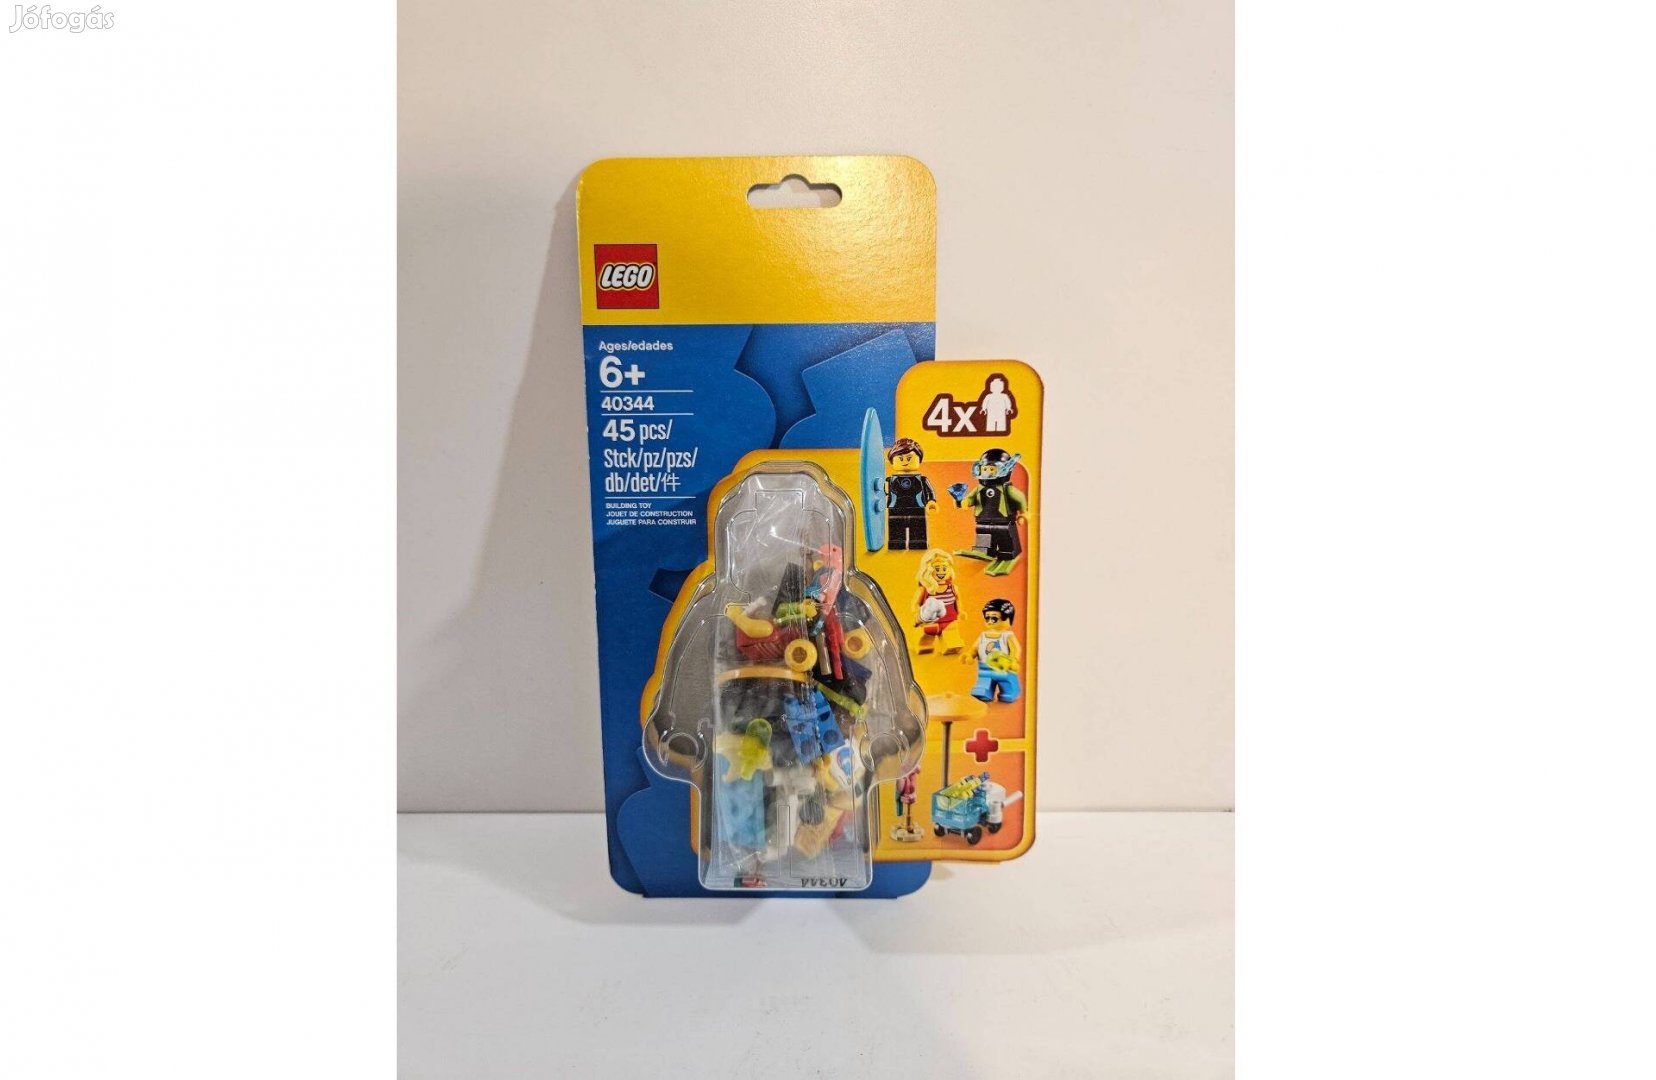 LEGO City - 40344 - Summer Celebration Minifigure Set blister pack - Ú